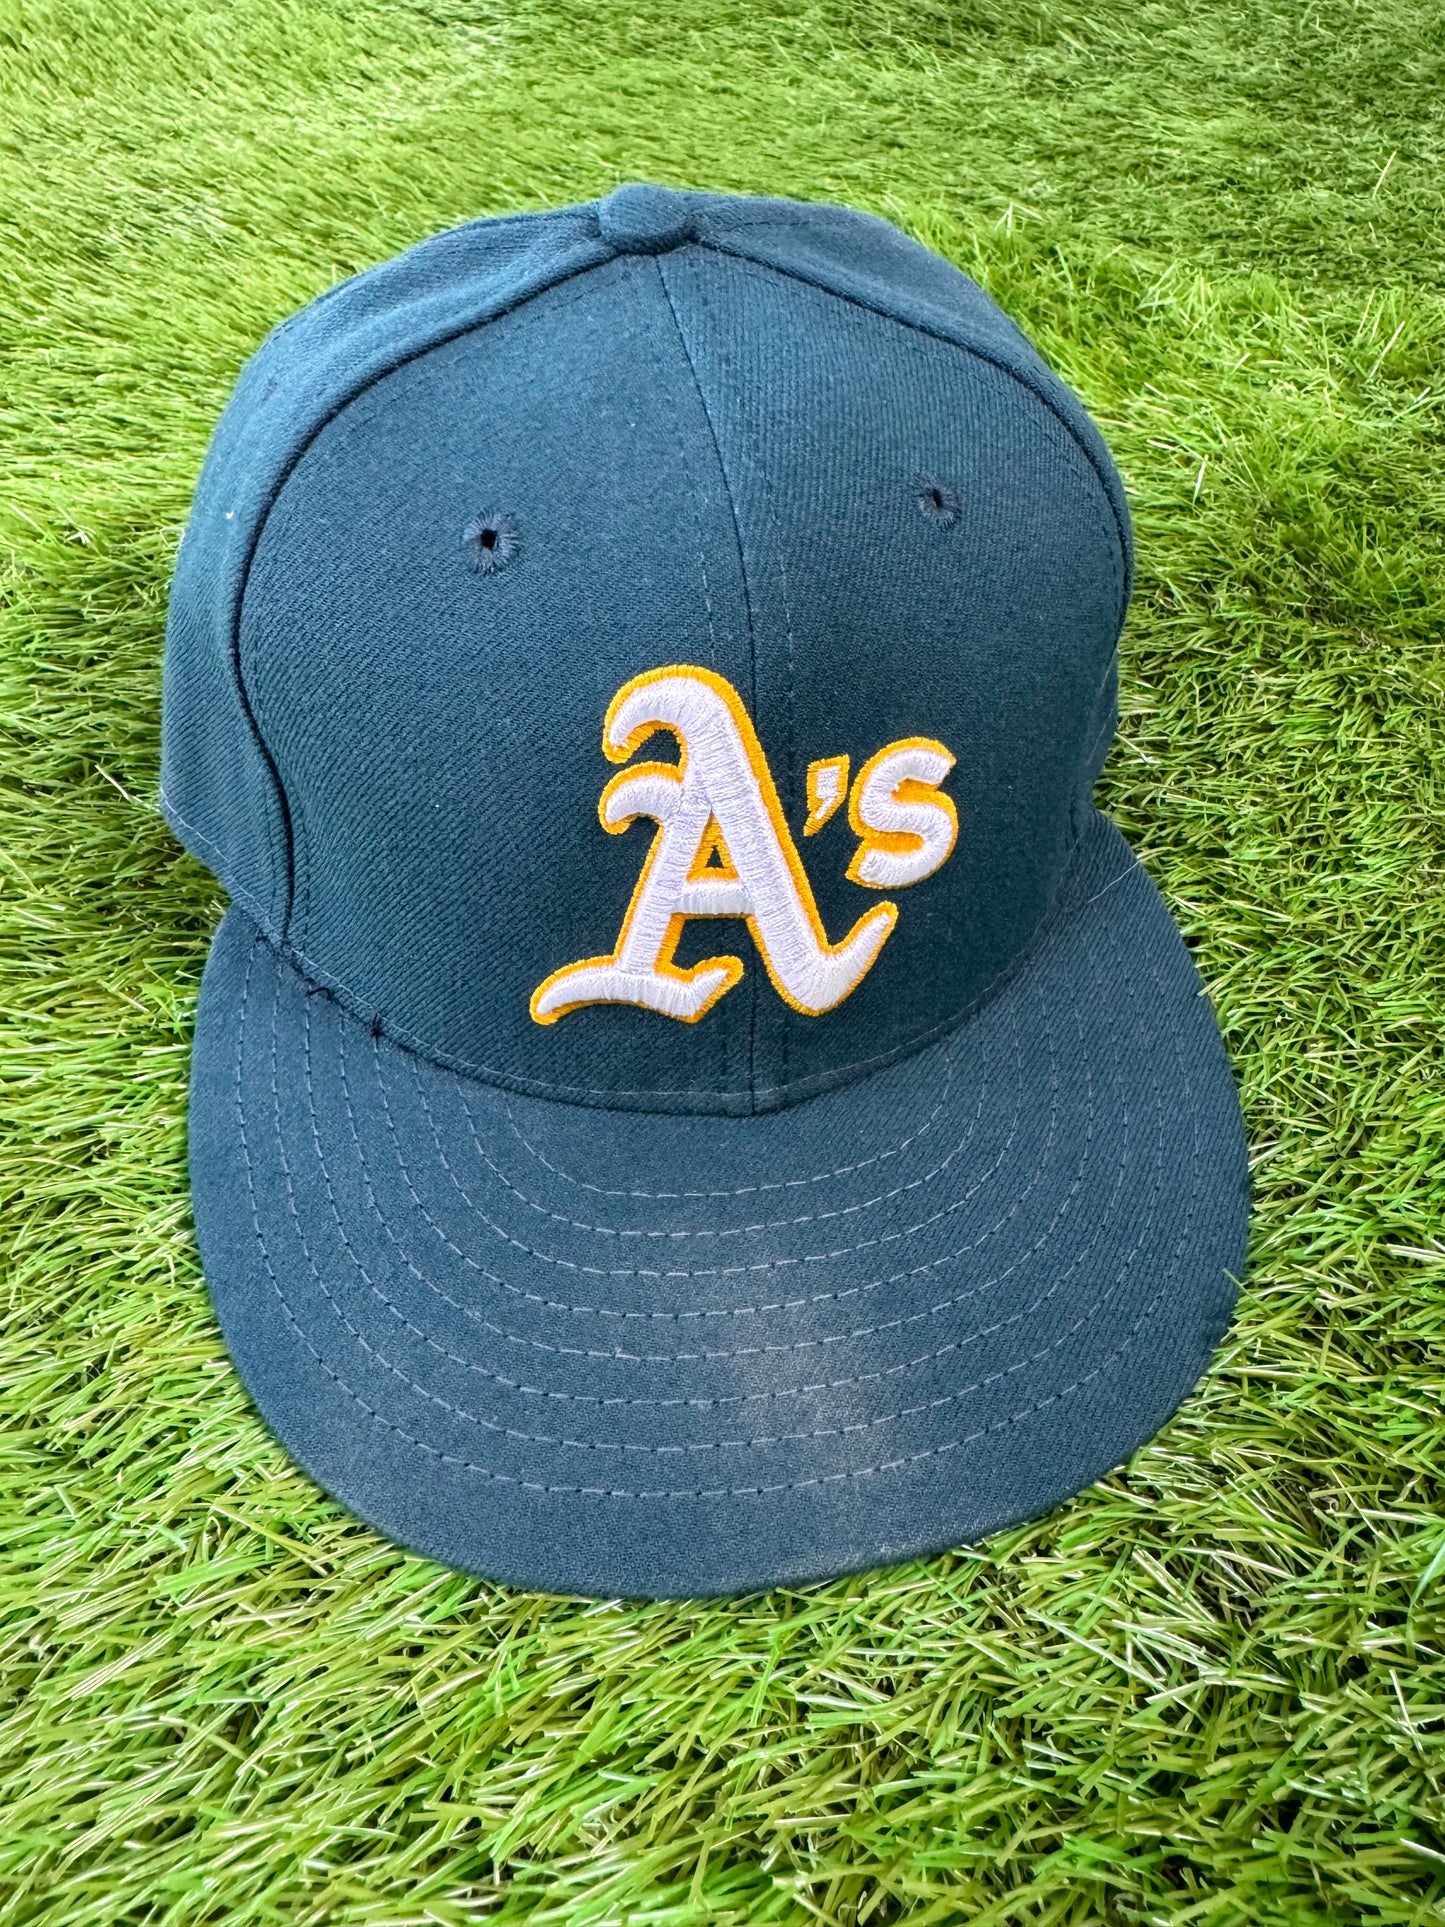 Oakland Athletics 2019 Sheldon Neuse Game Worn MLB Baseball Hat (7 1/8)